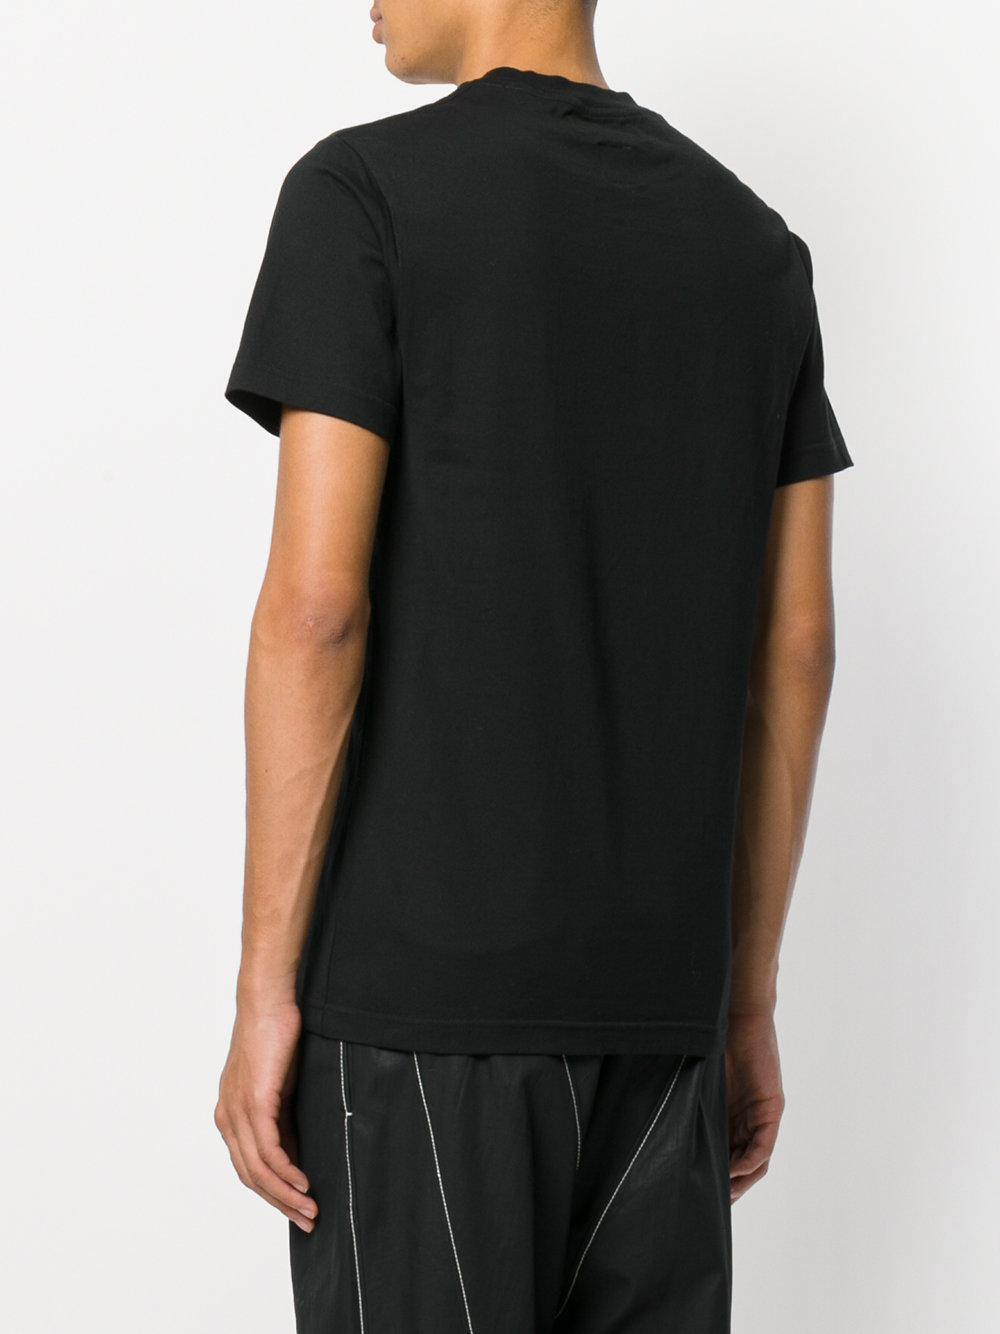 Facetasm Cotton Logo Printed T-shirt in Black for Men - Lyst